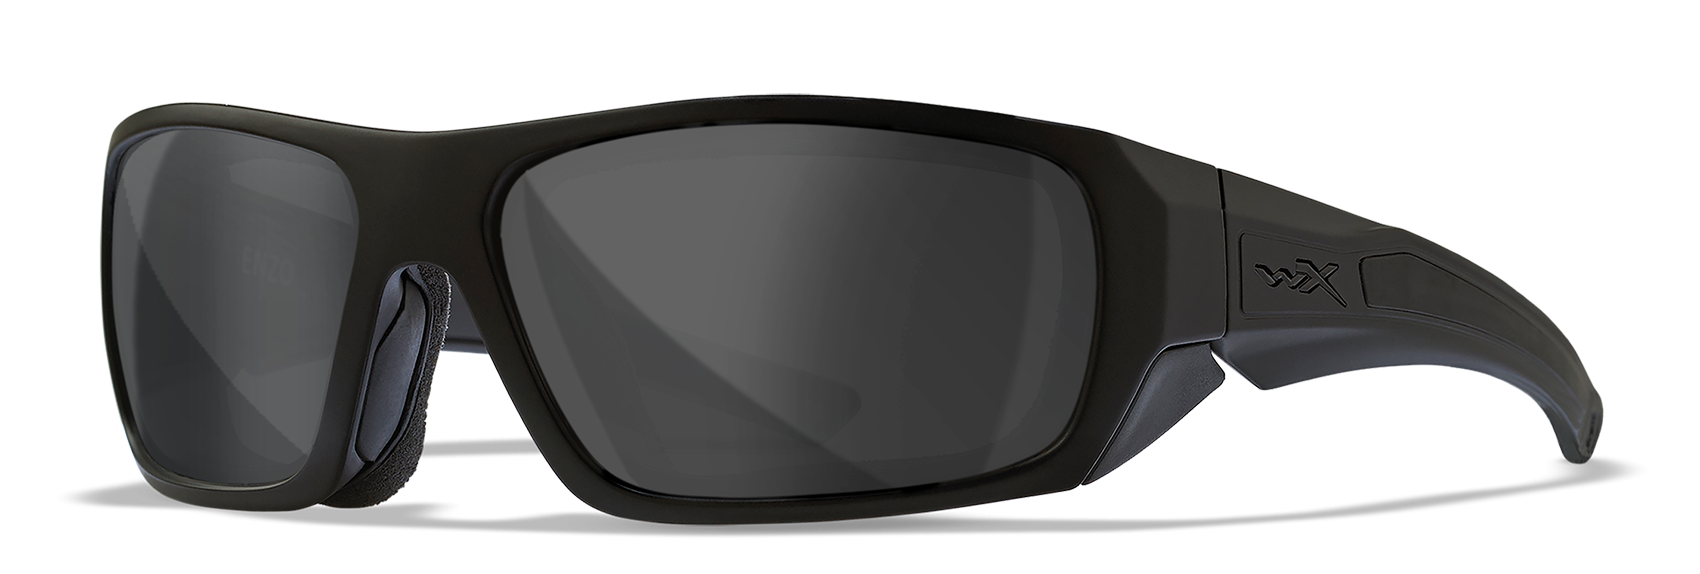 Wiley X WX Enzo Smoke Gray Lens Polycarbonate Sunglasses